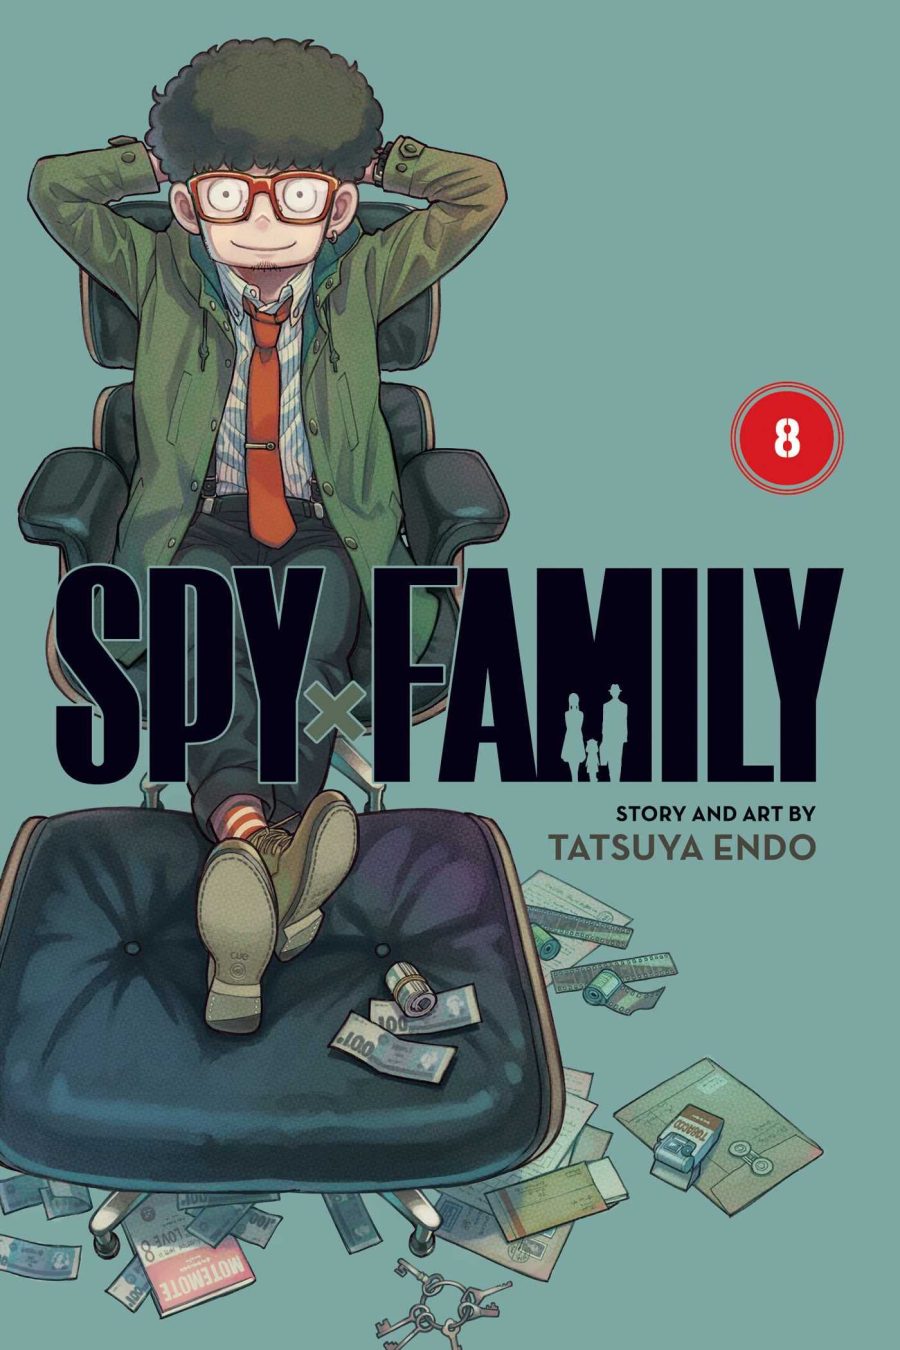 Spy x Family, Vol. 8 Paperback